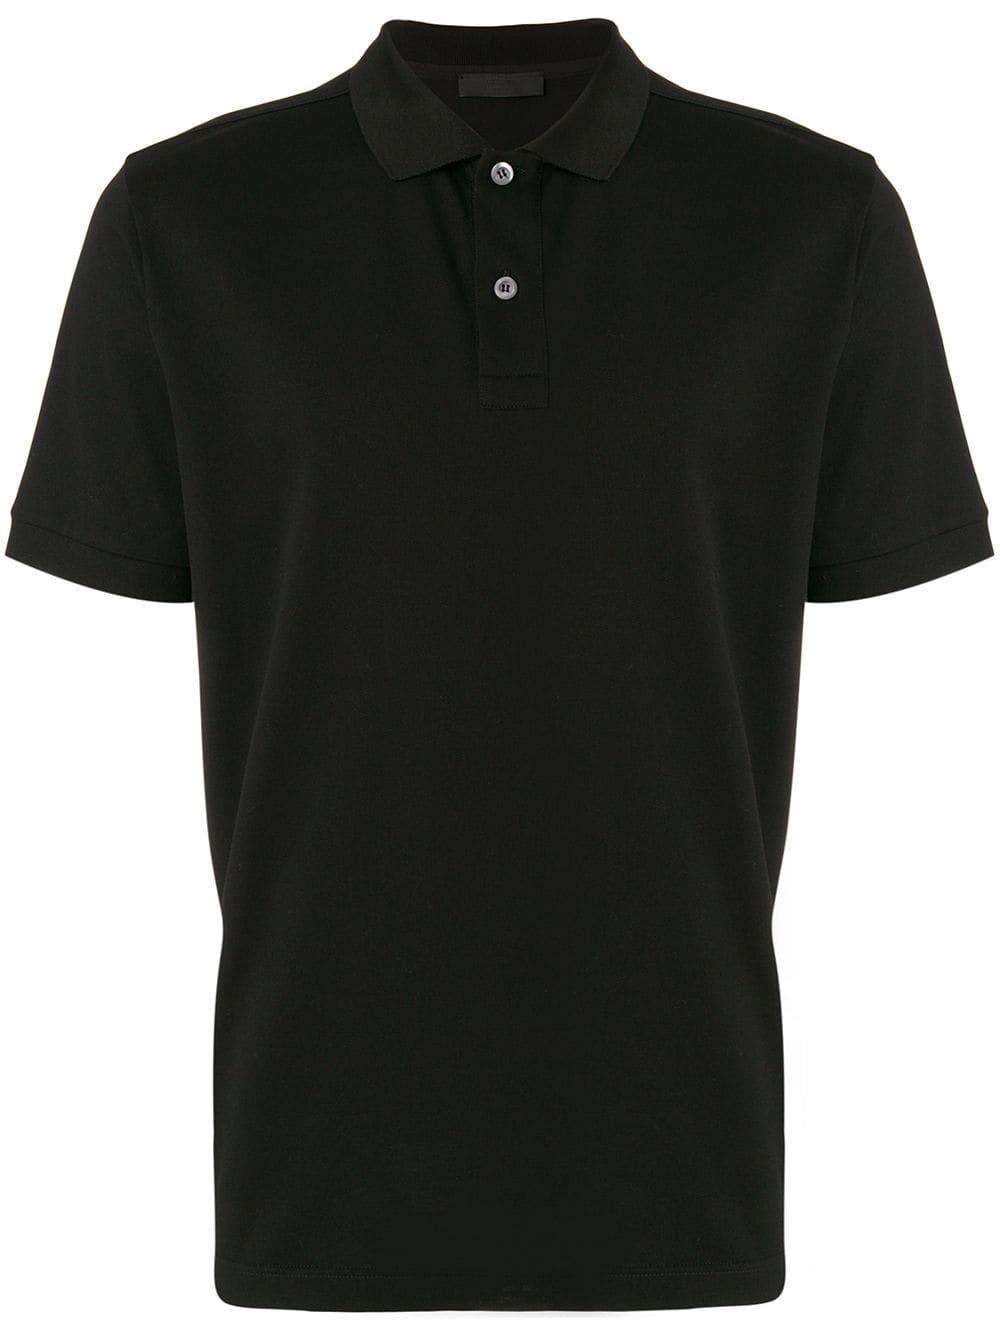 Prada Cotton Logo Patch Polo Shirt in Black for Men - Lyst